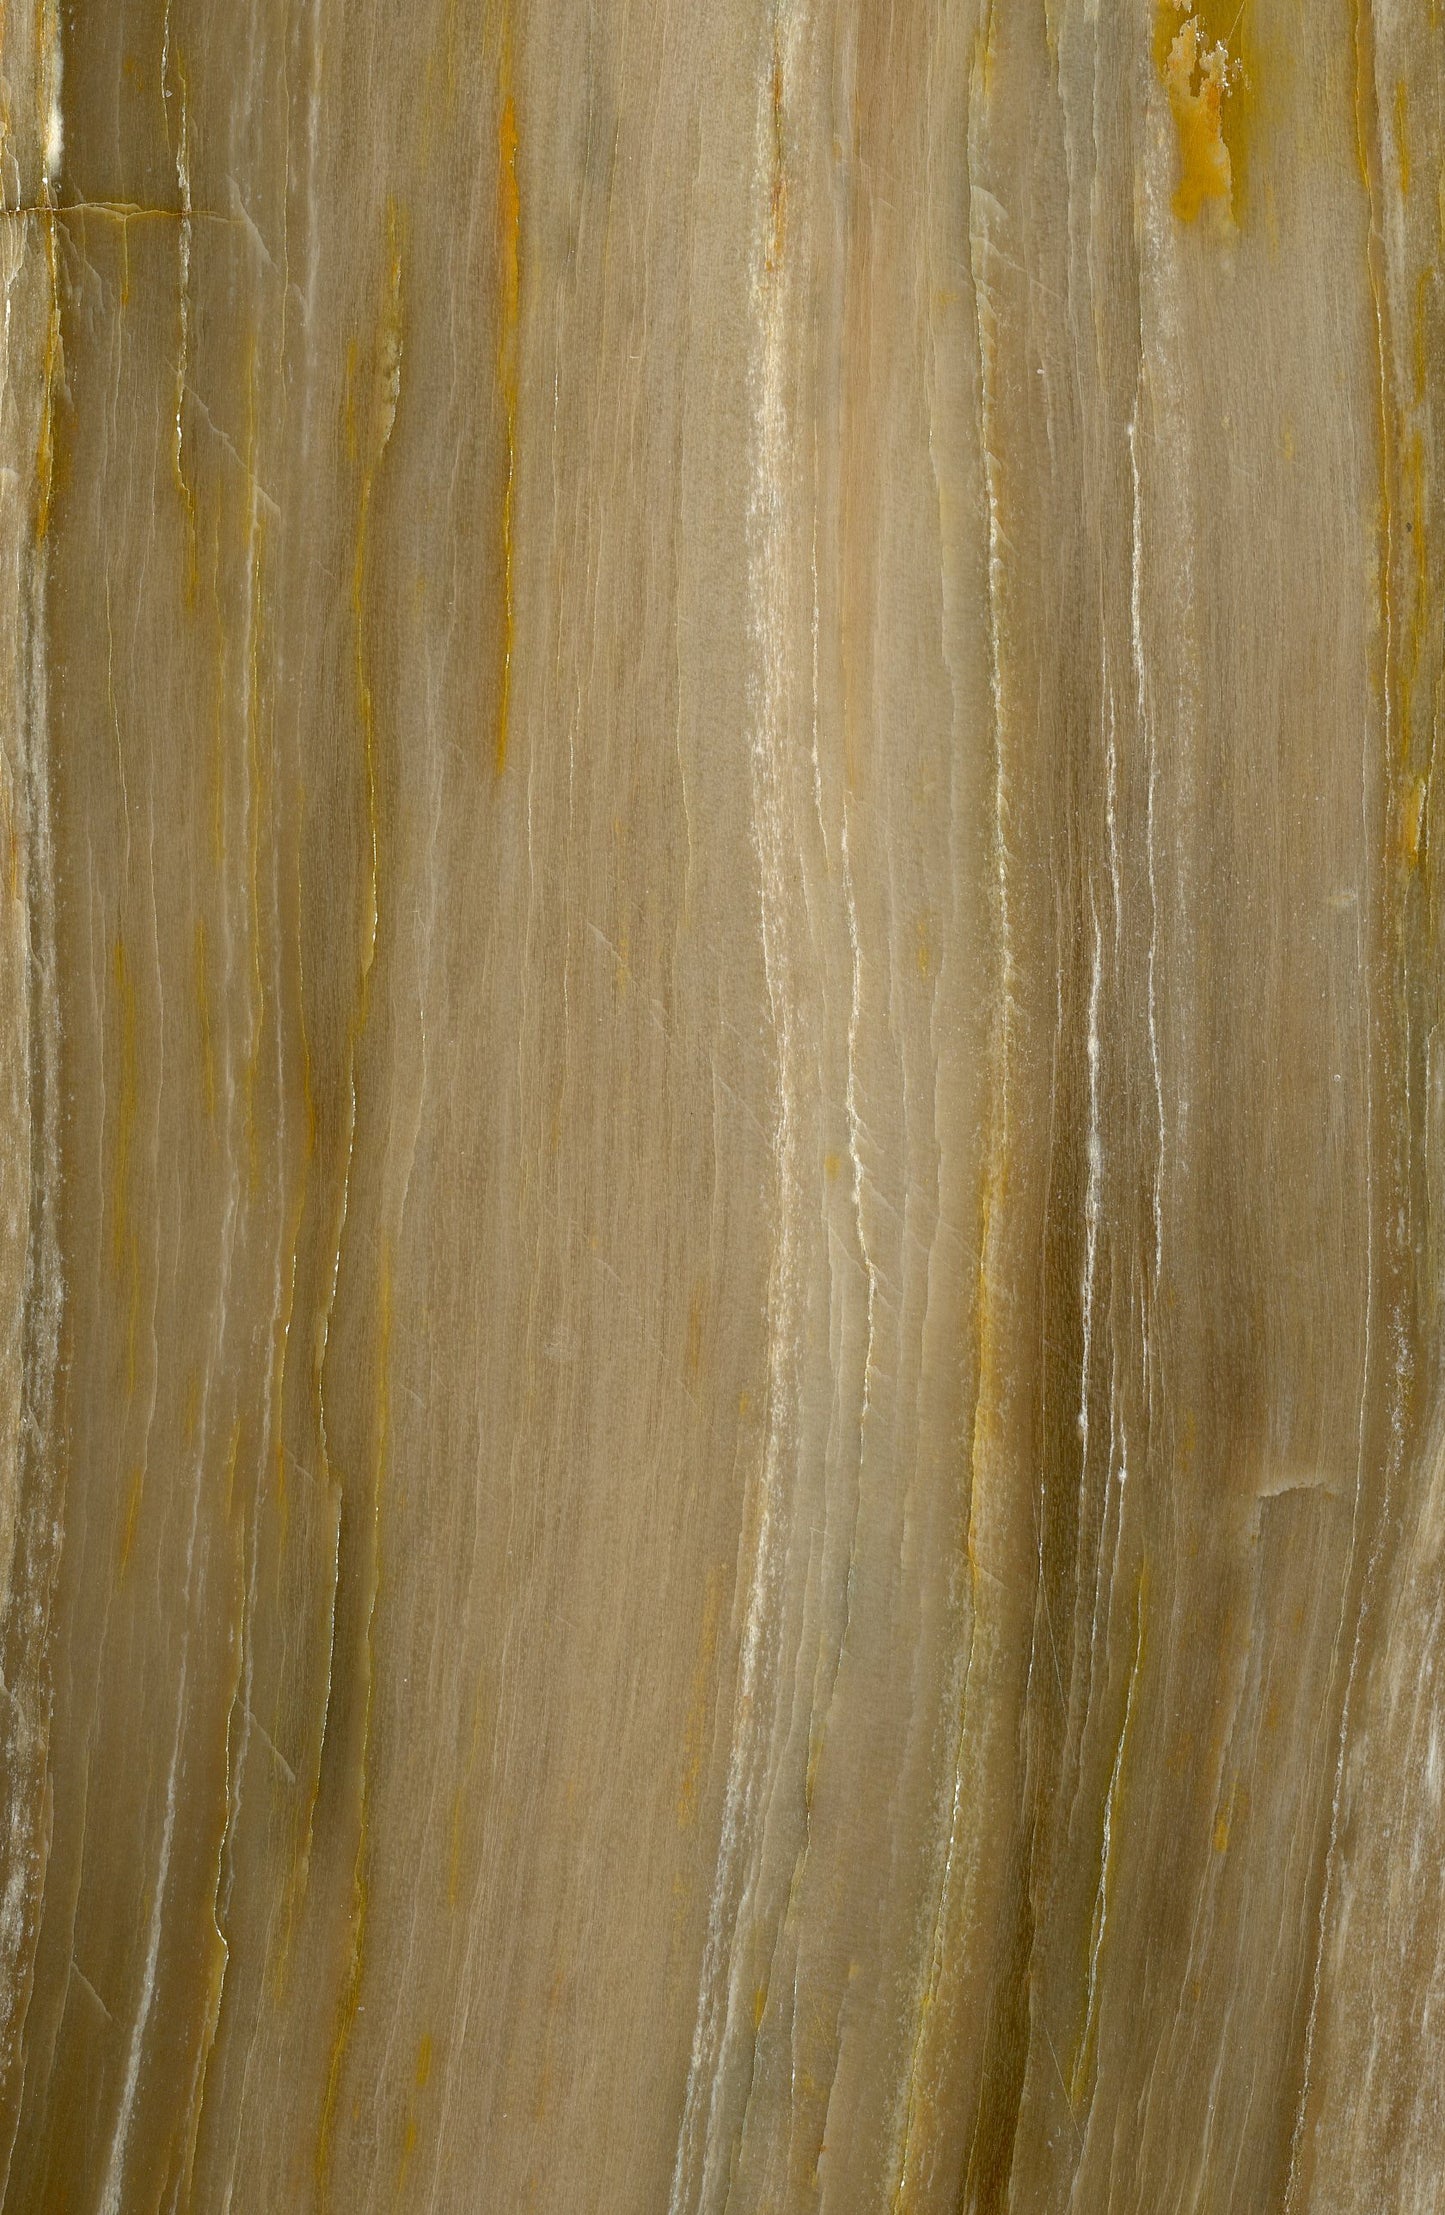 Primorsky conifer - longitudinal section